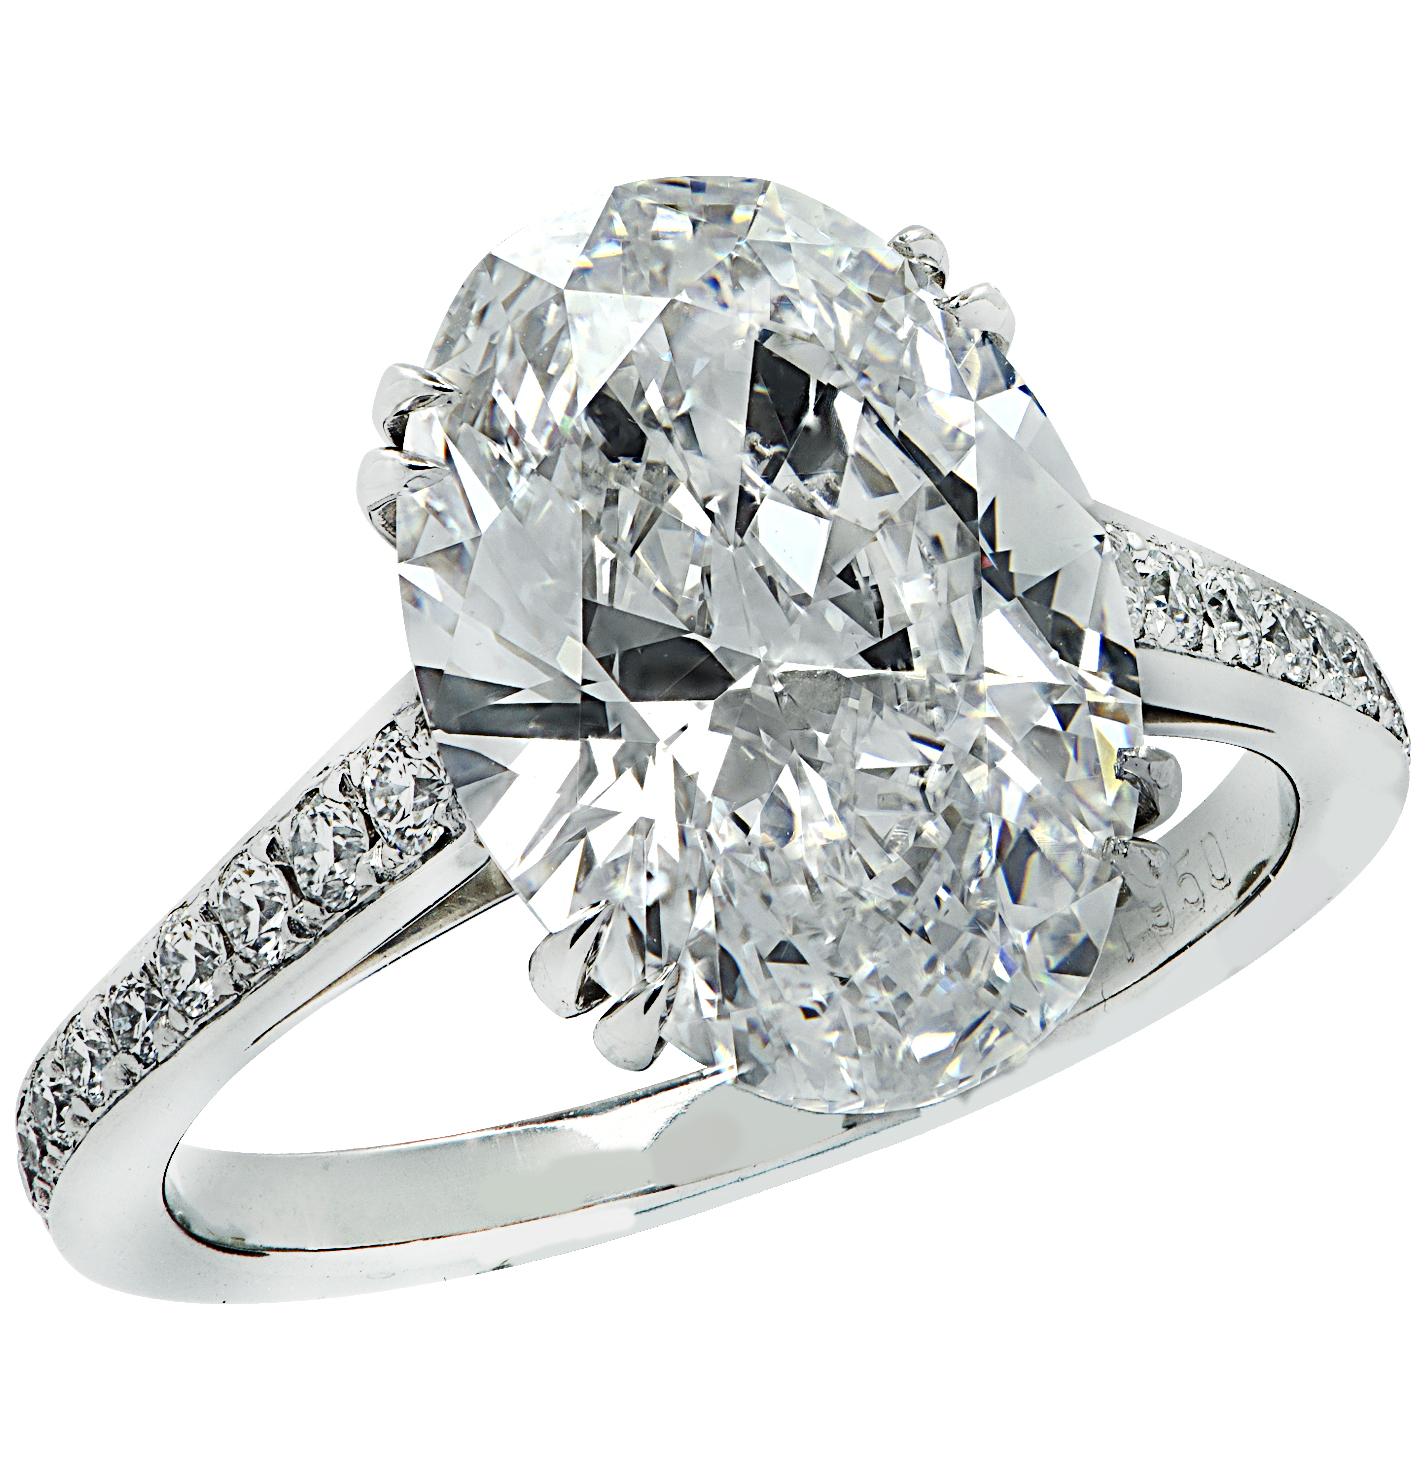 Modern Vivid Diamonds GIA Certified 4.63 Carat Oval Diamond Engagement Ring